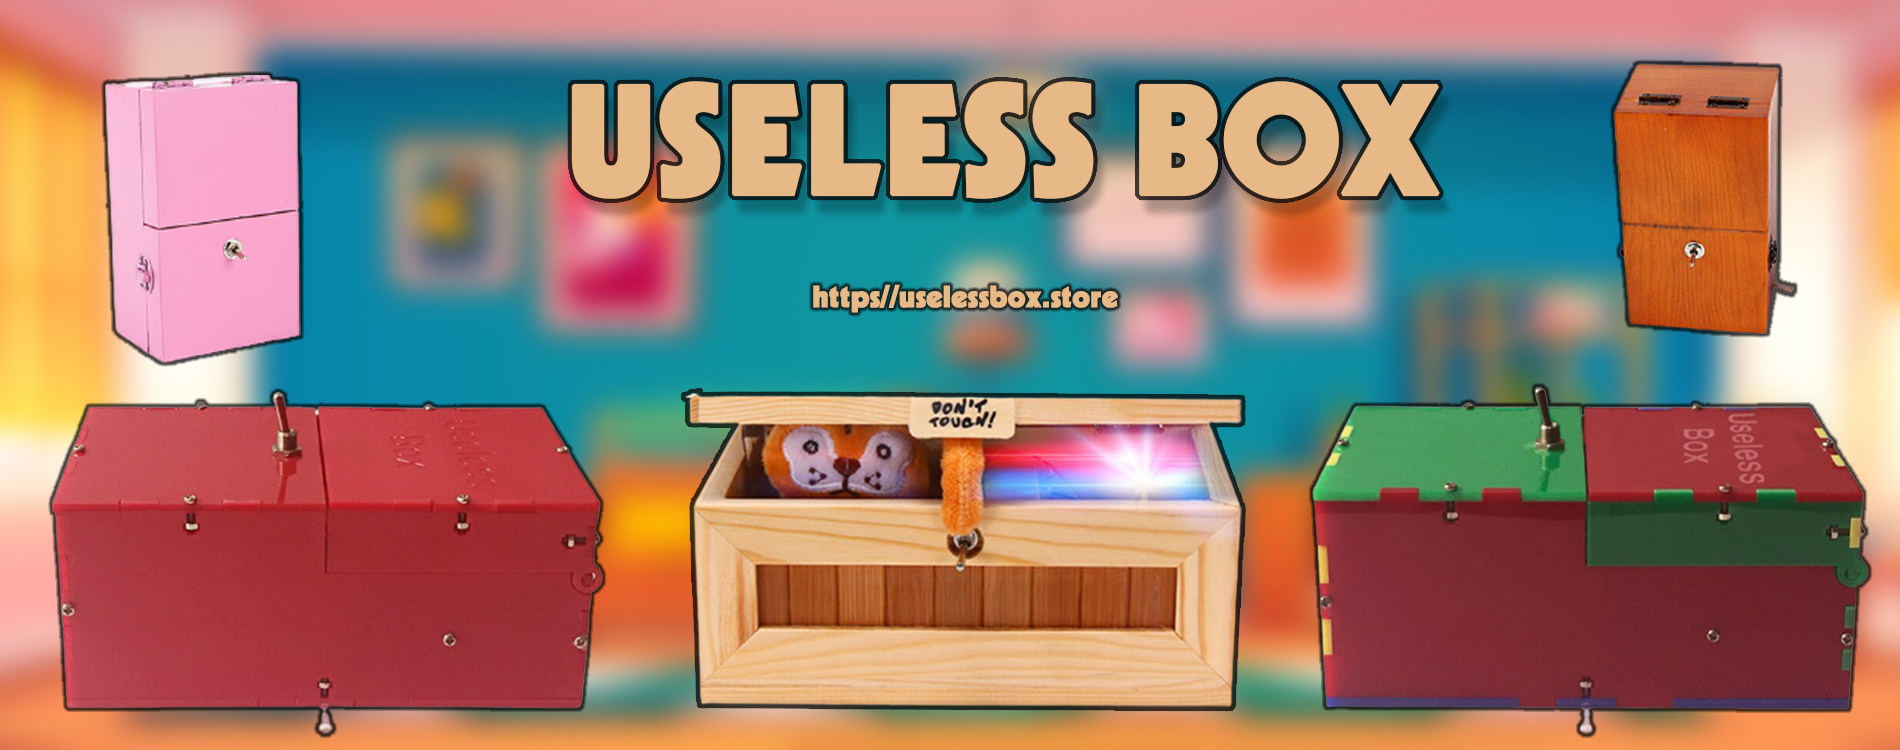 useless-box-banner